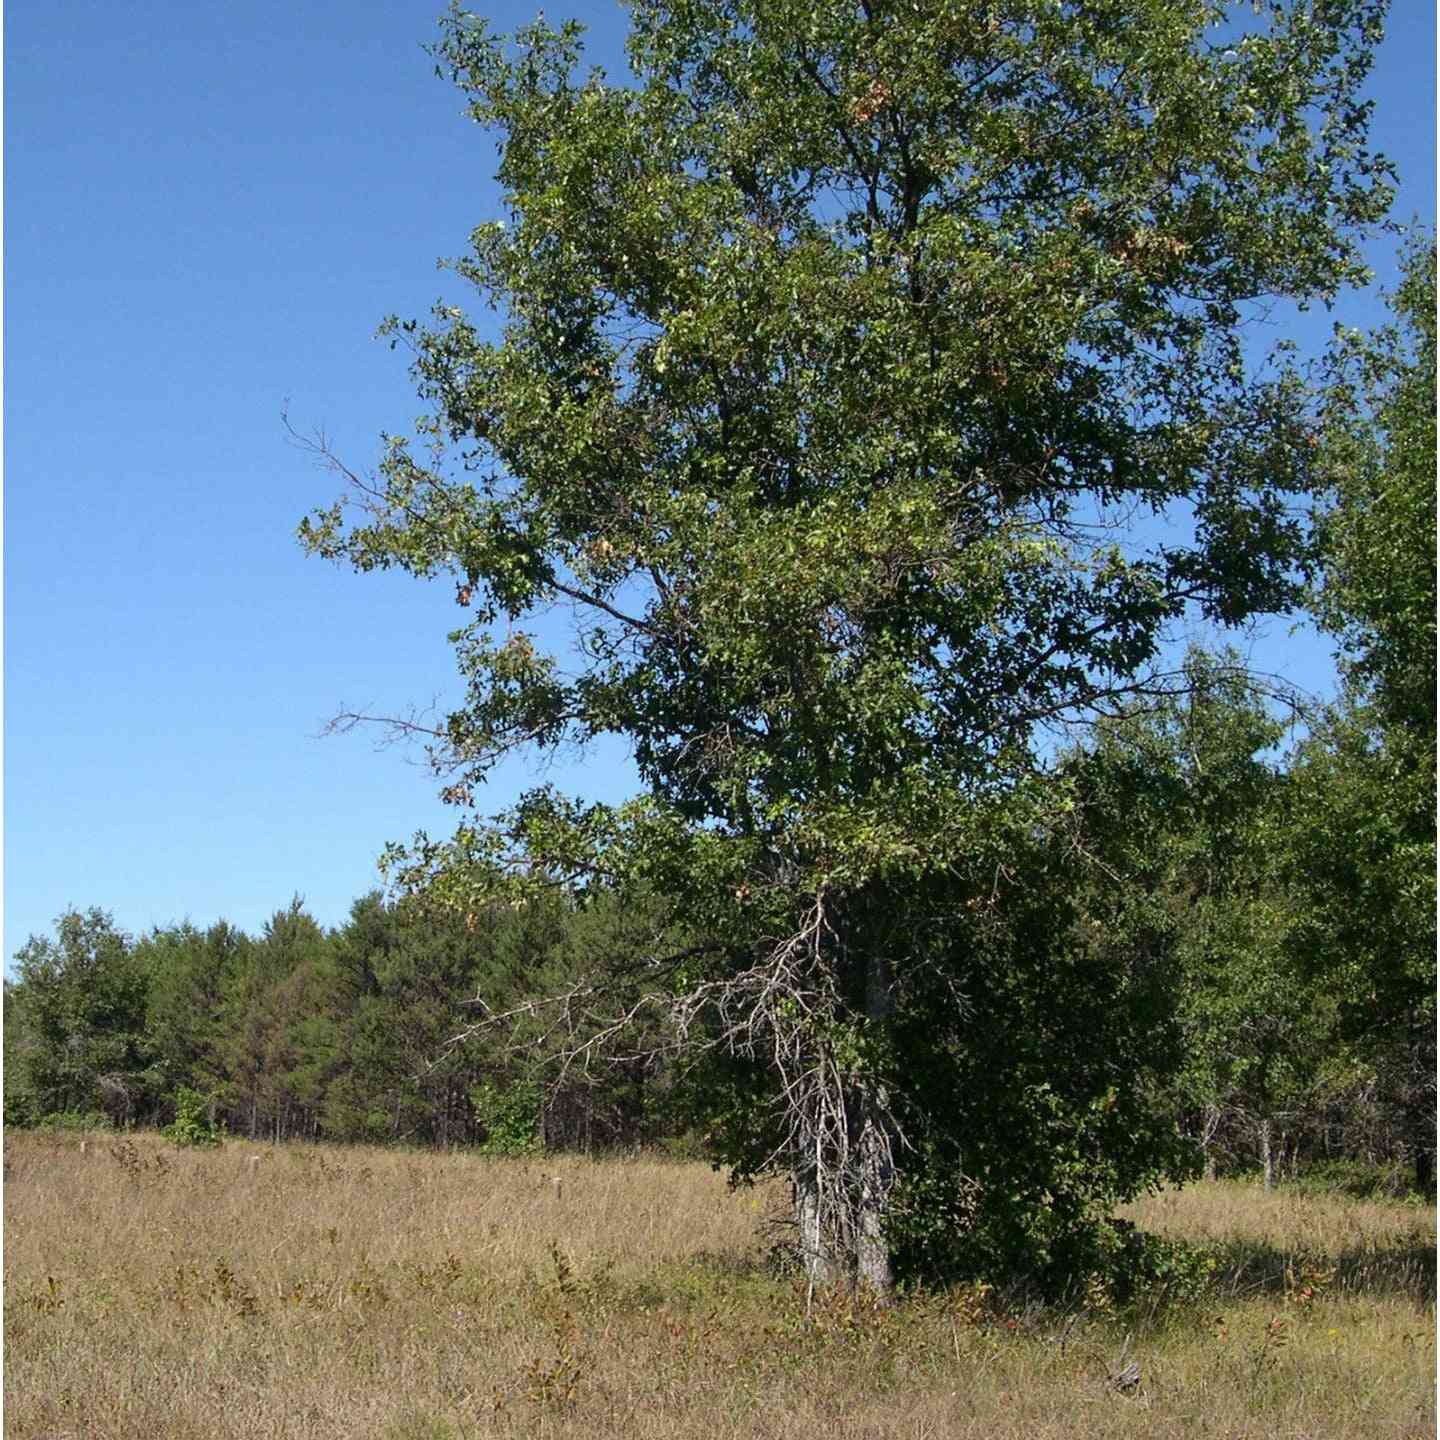 Quercus ellipsoidalis (Hills Oak / Northern Pin Oak)  Natural Communities LLC